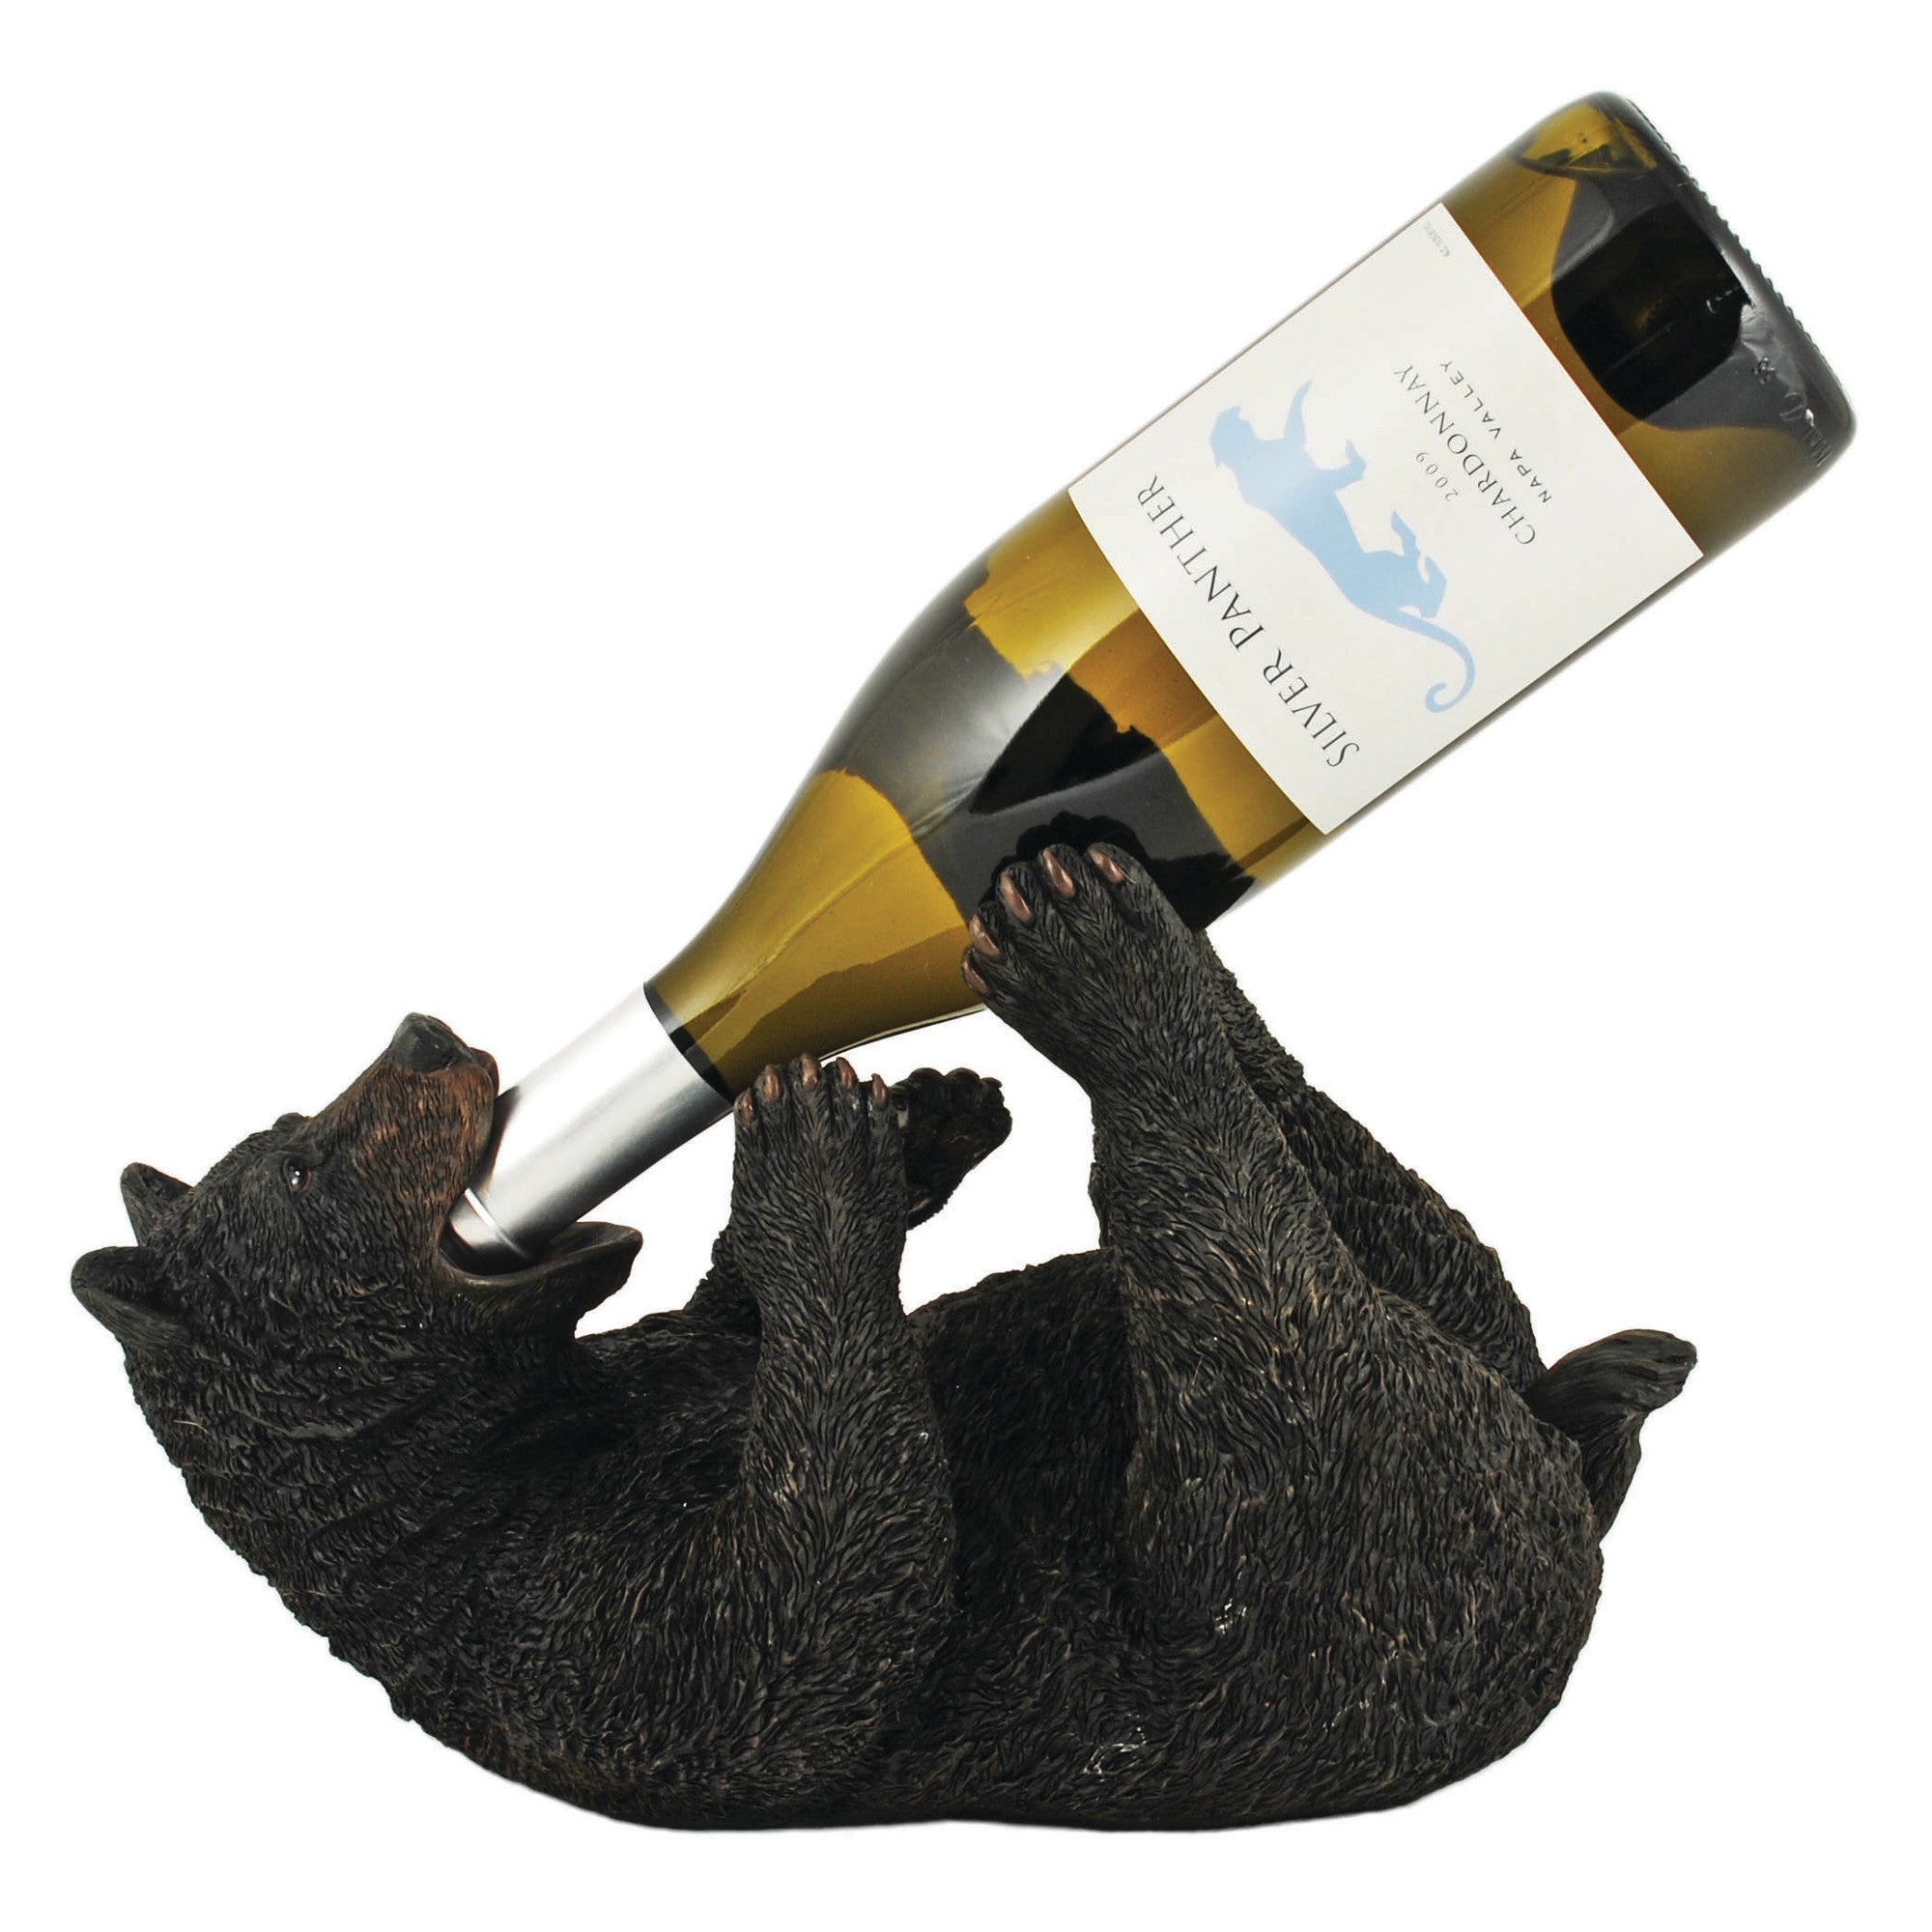 Frisky Cub Bottle Holder by True (2276) Wine Accessories True